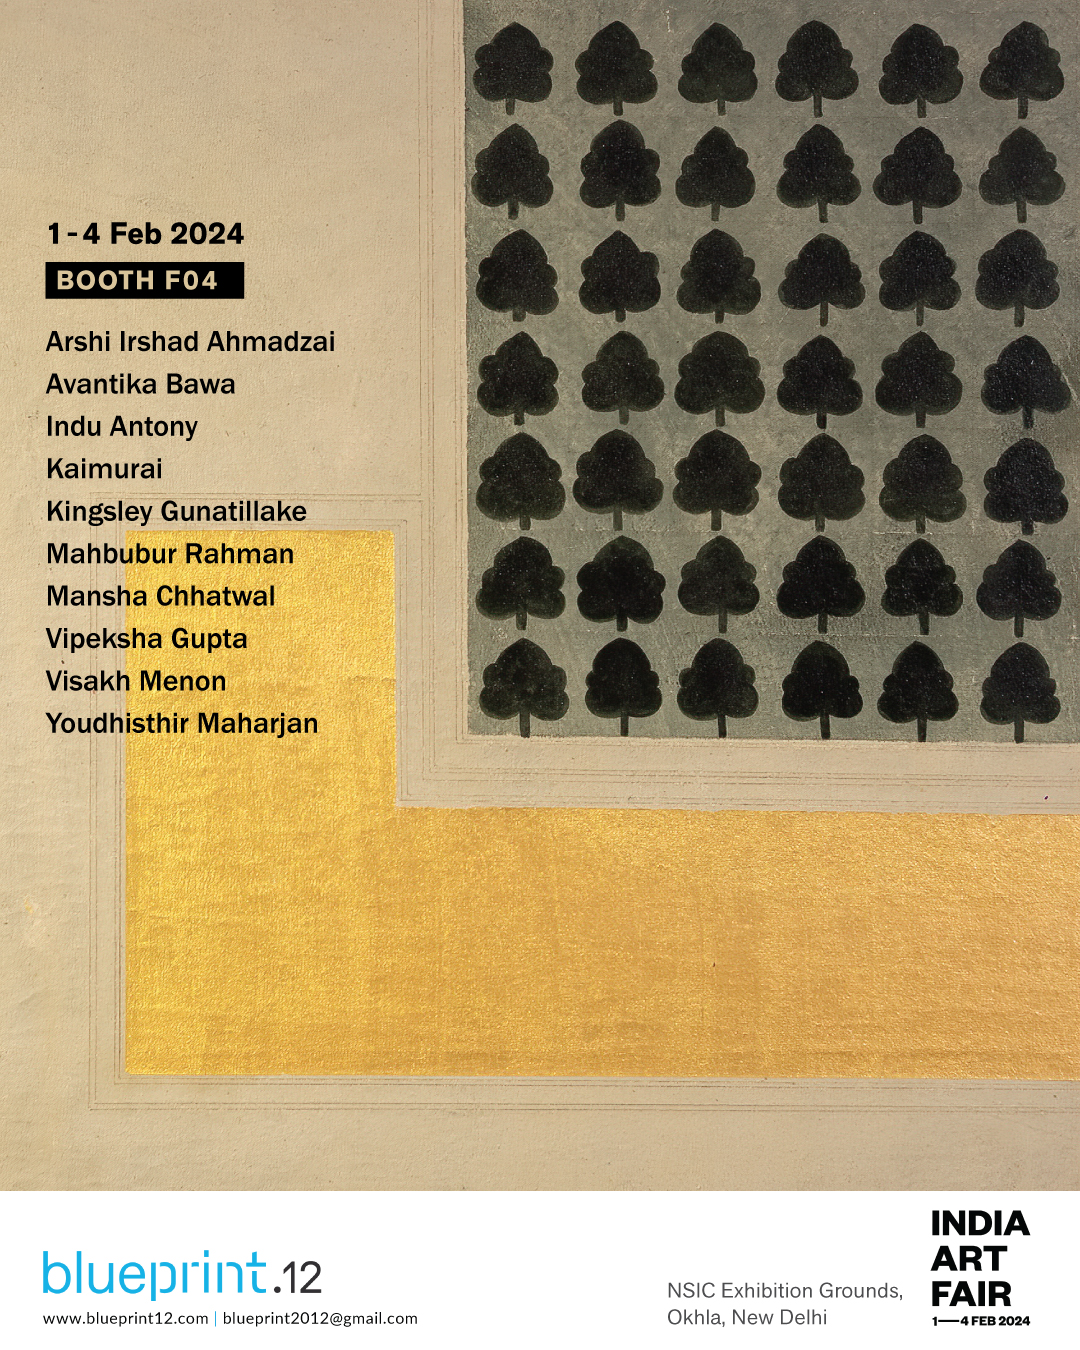 India Art Fair '24, South Asian Artists, Blueprint12